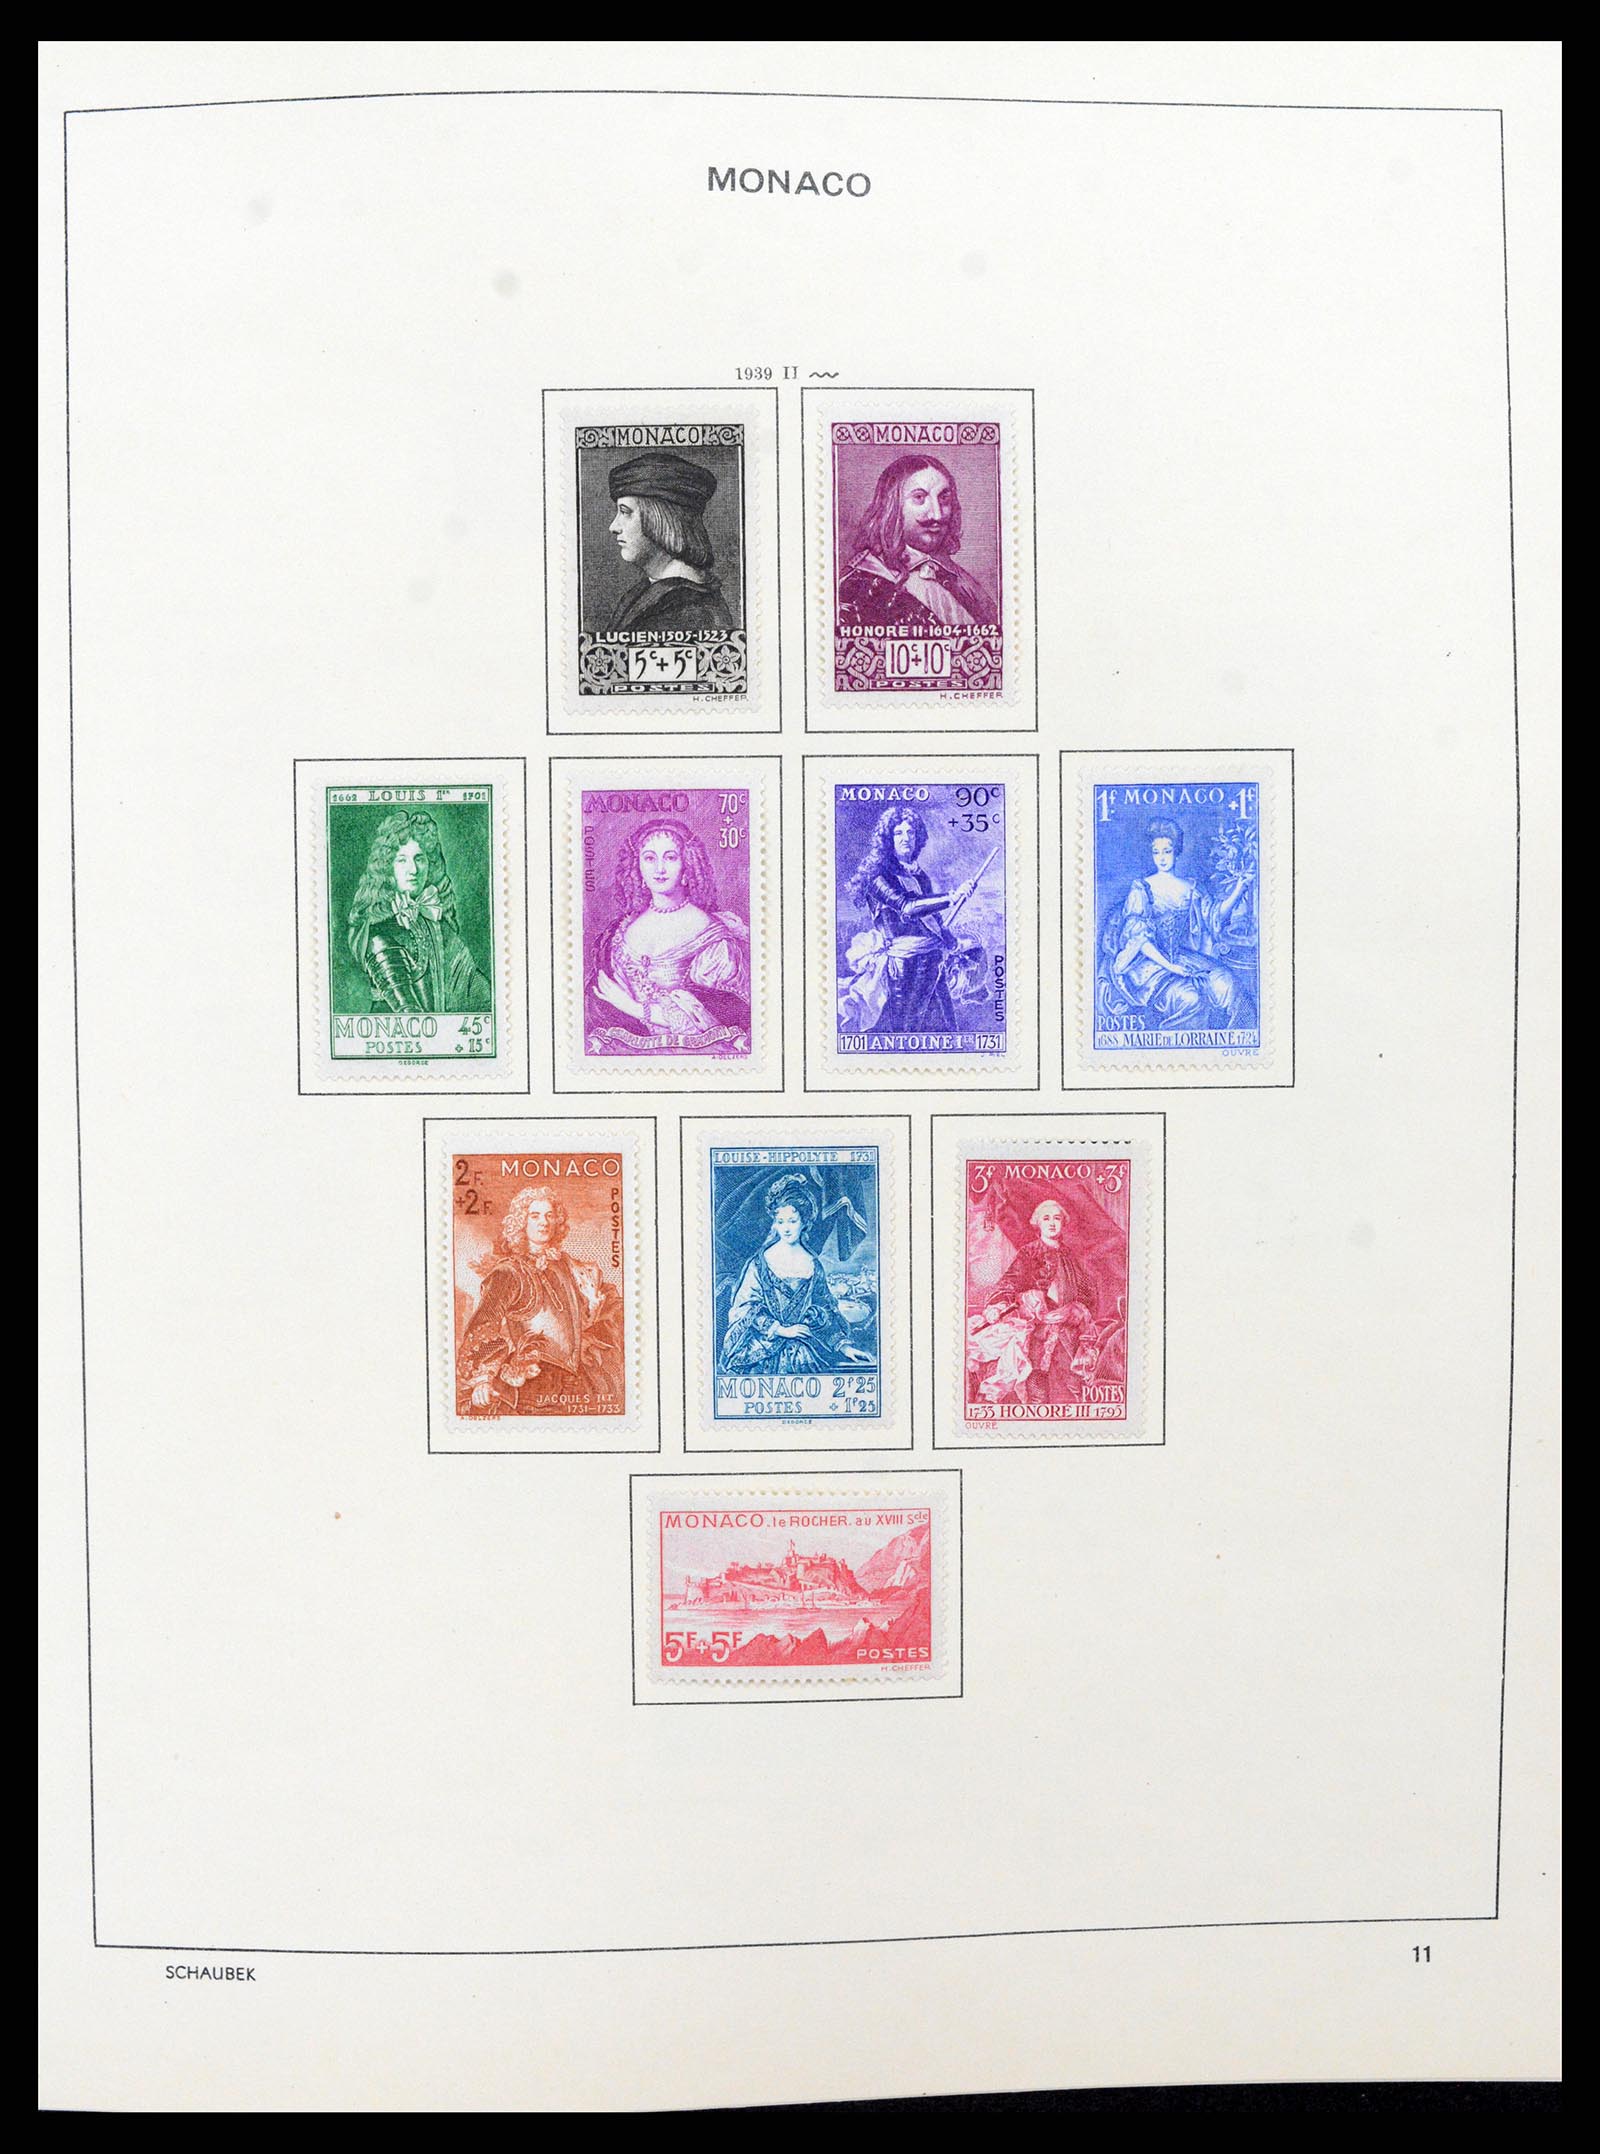 37570 012 - Stamp collection 37570 Monaco 1885-2013.